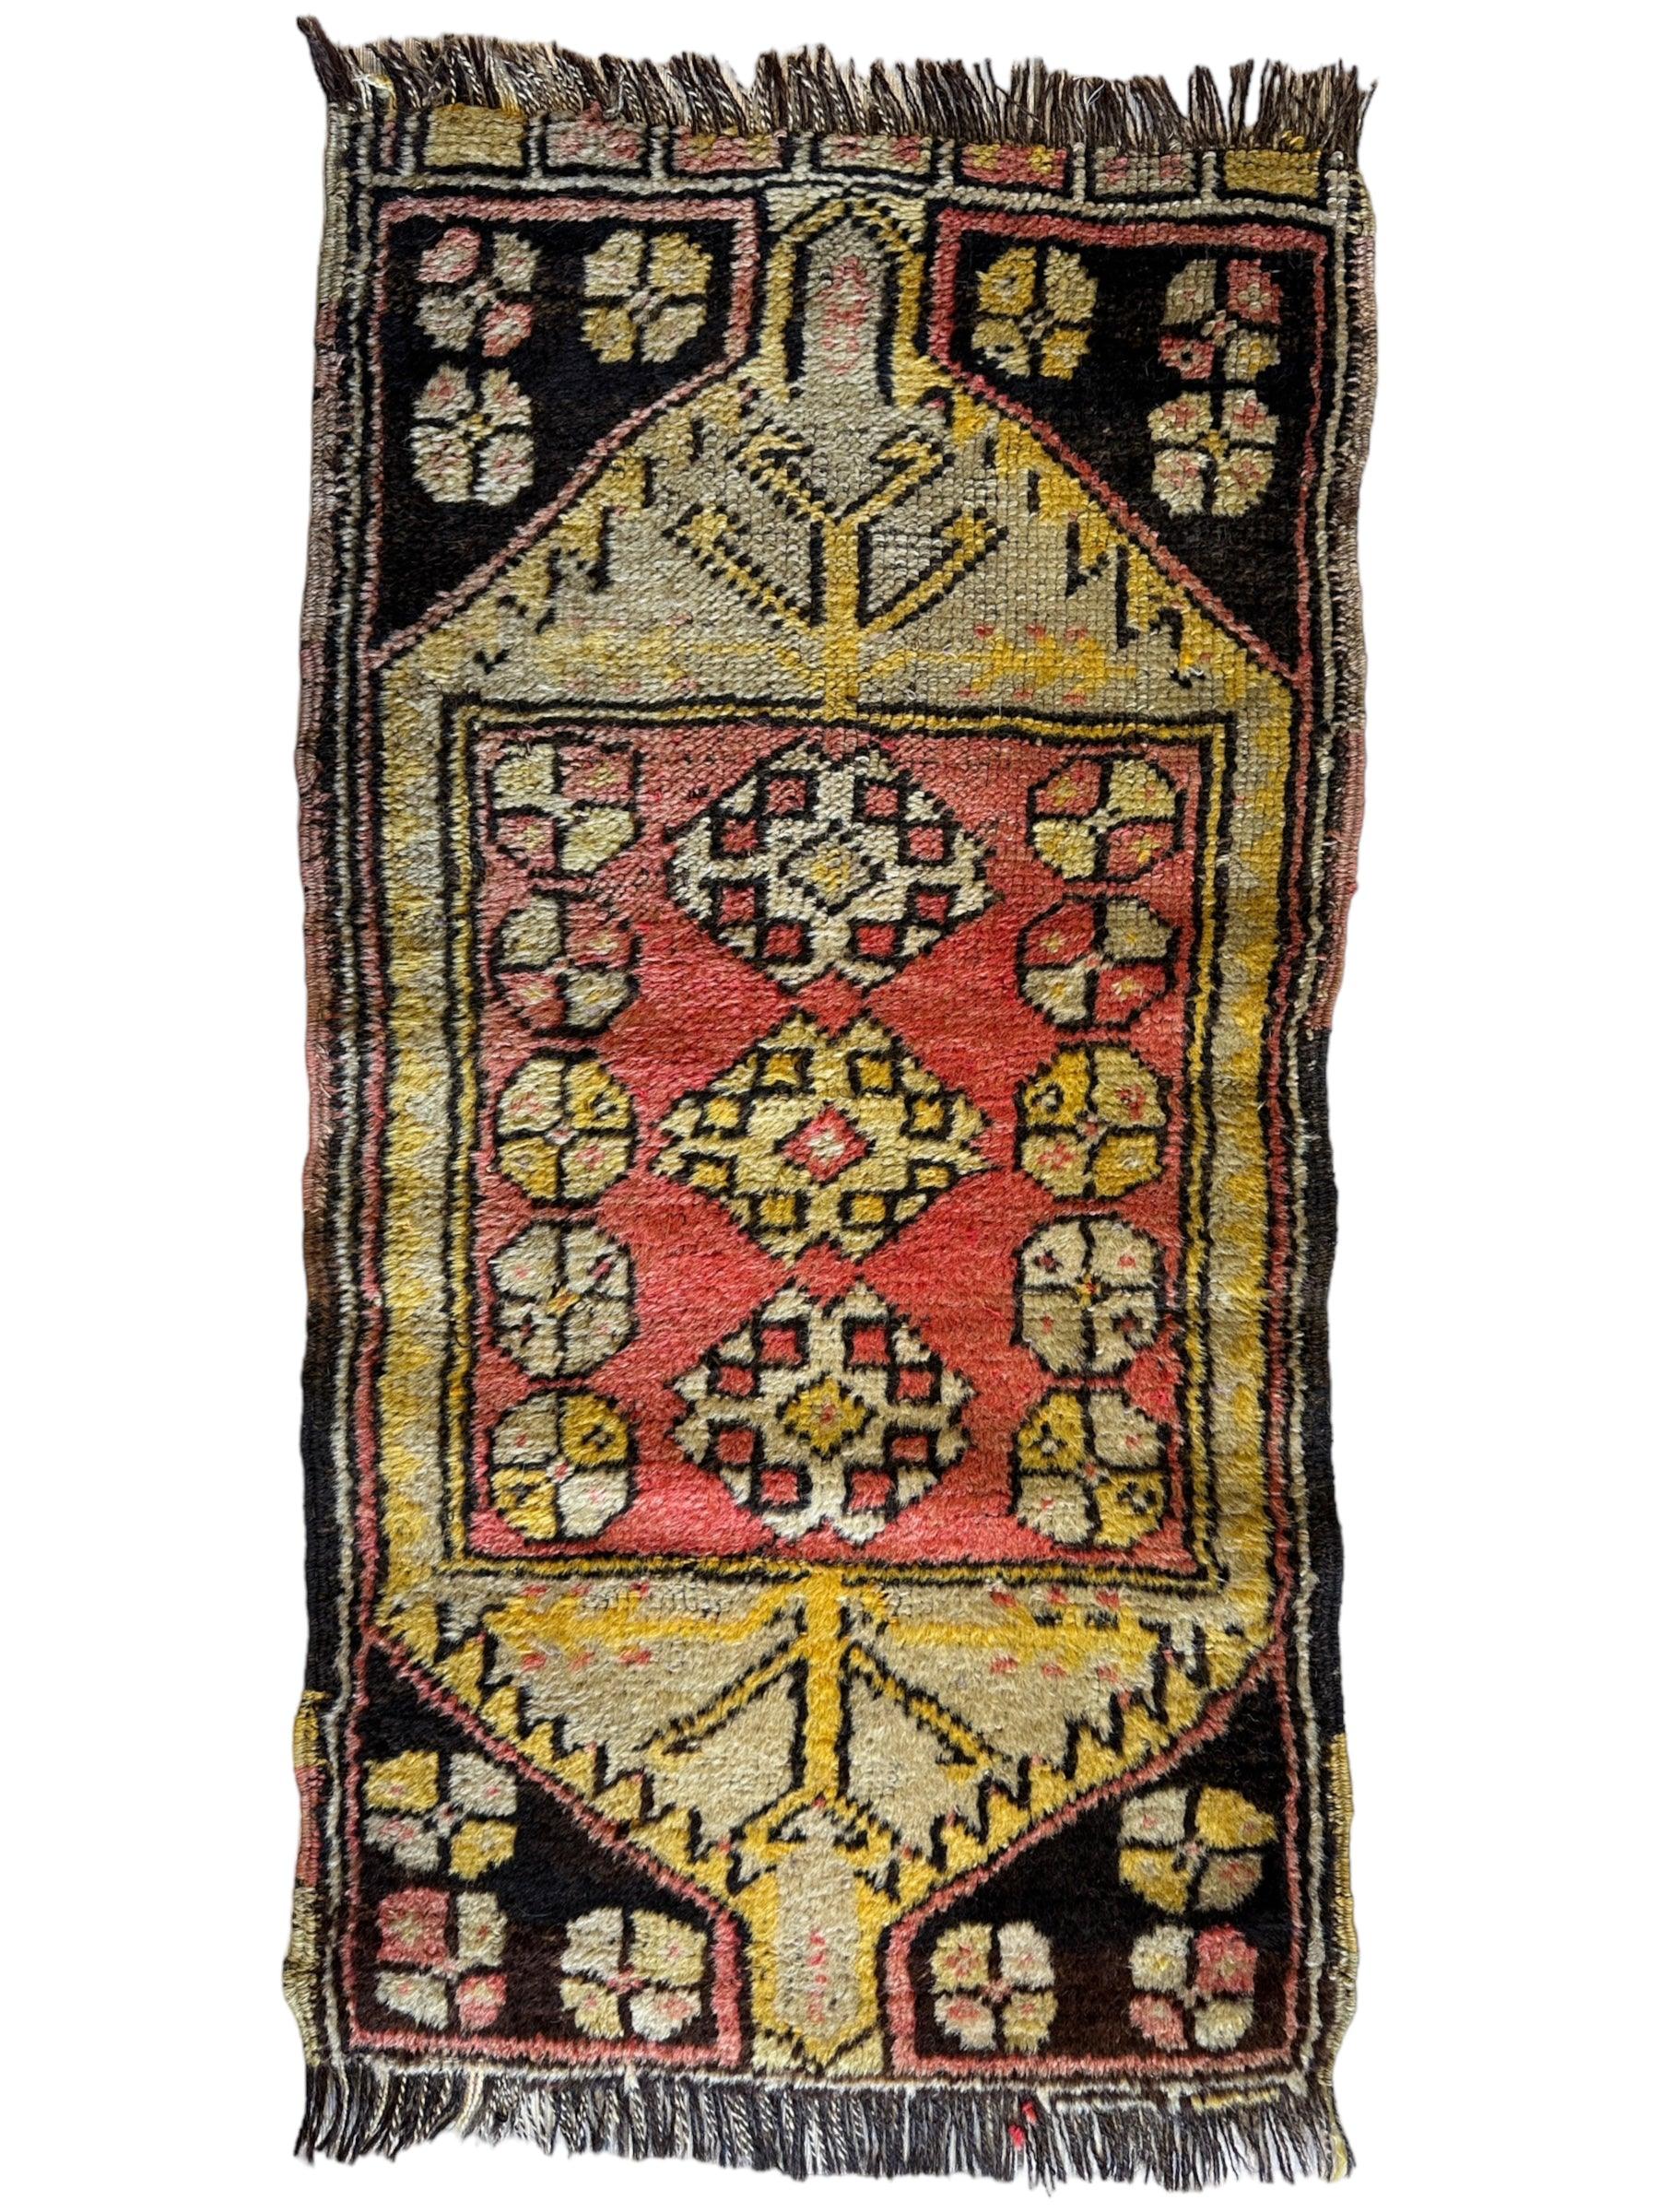 Small Vintage Turkish Wool Rug 18” x 34”